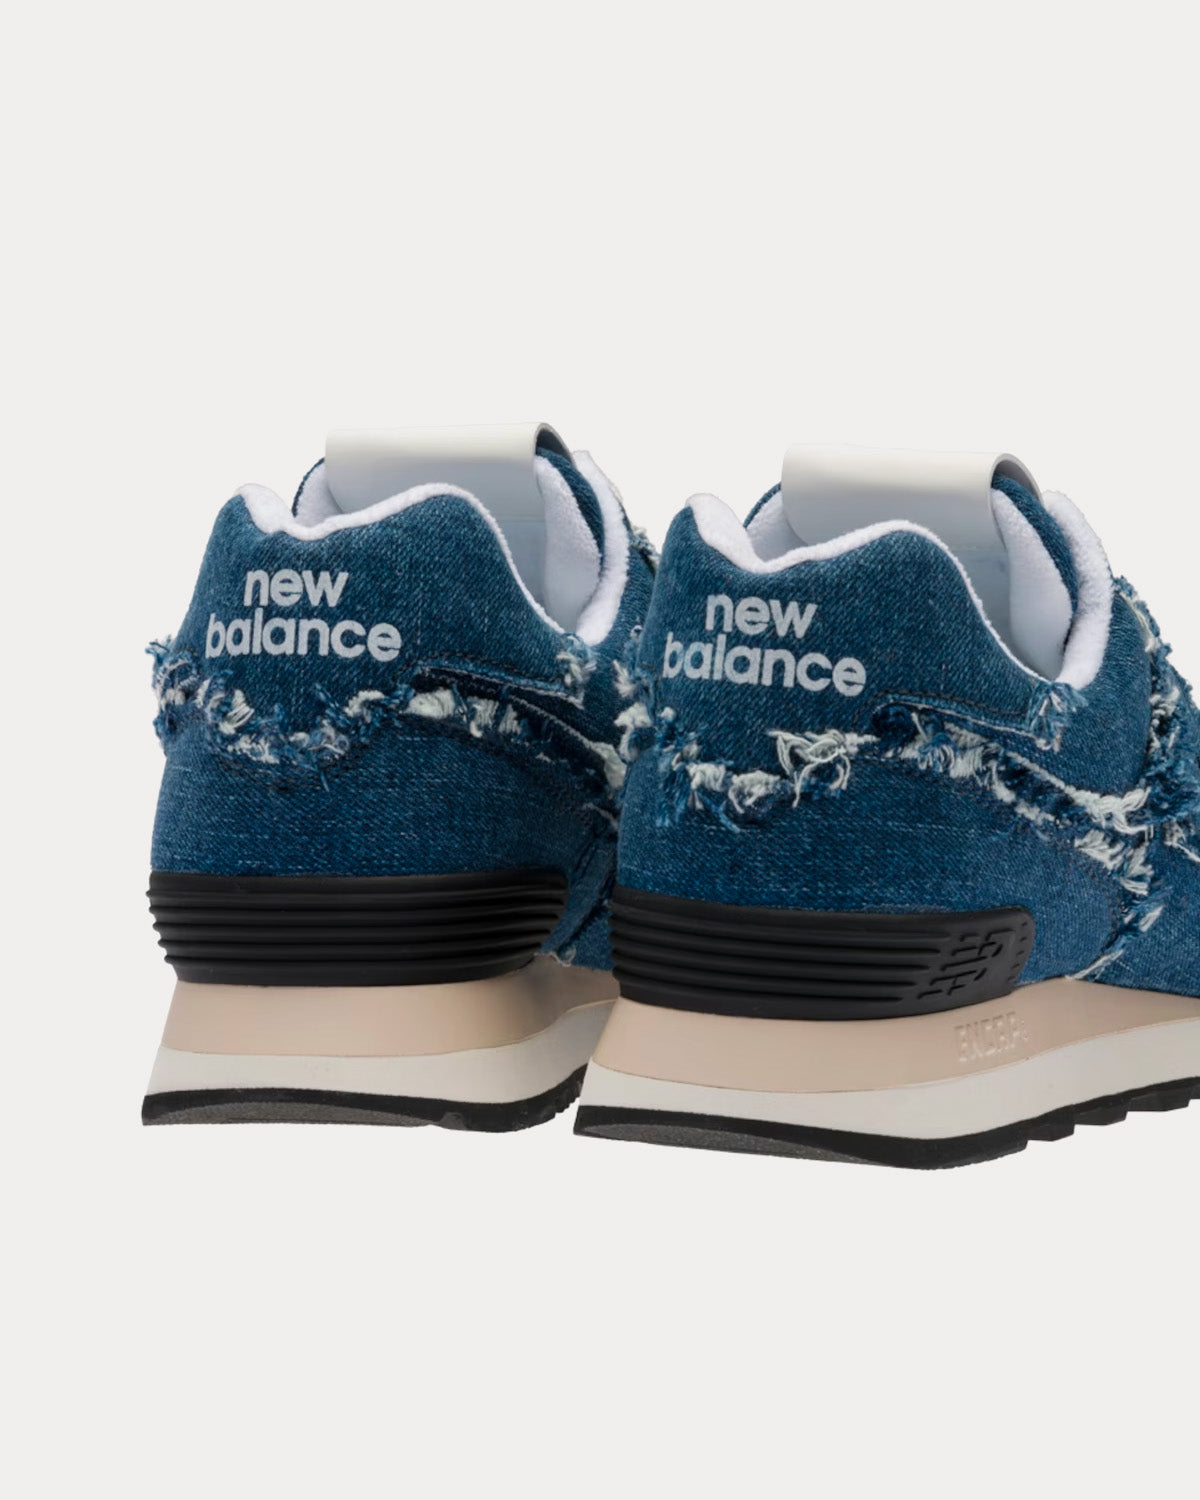 New Balance x Miu Miu - 574 Denim Blue Low Top Sneakers